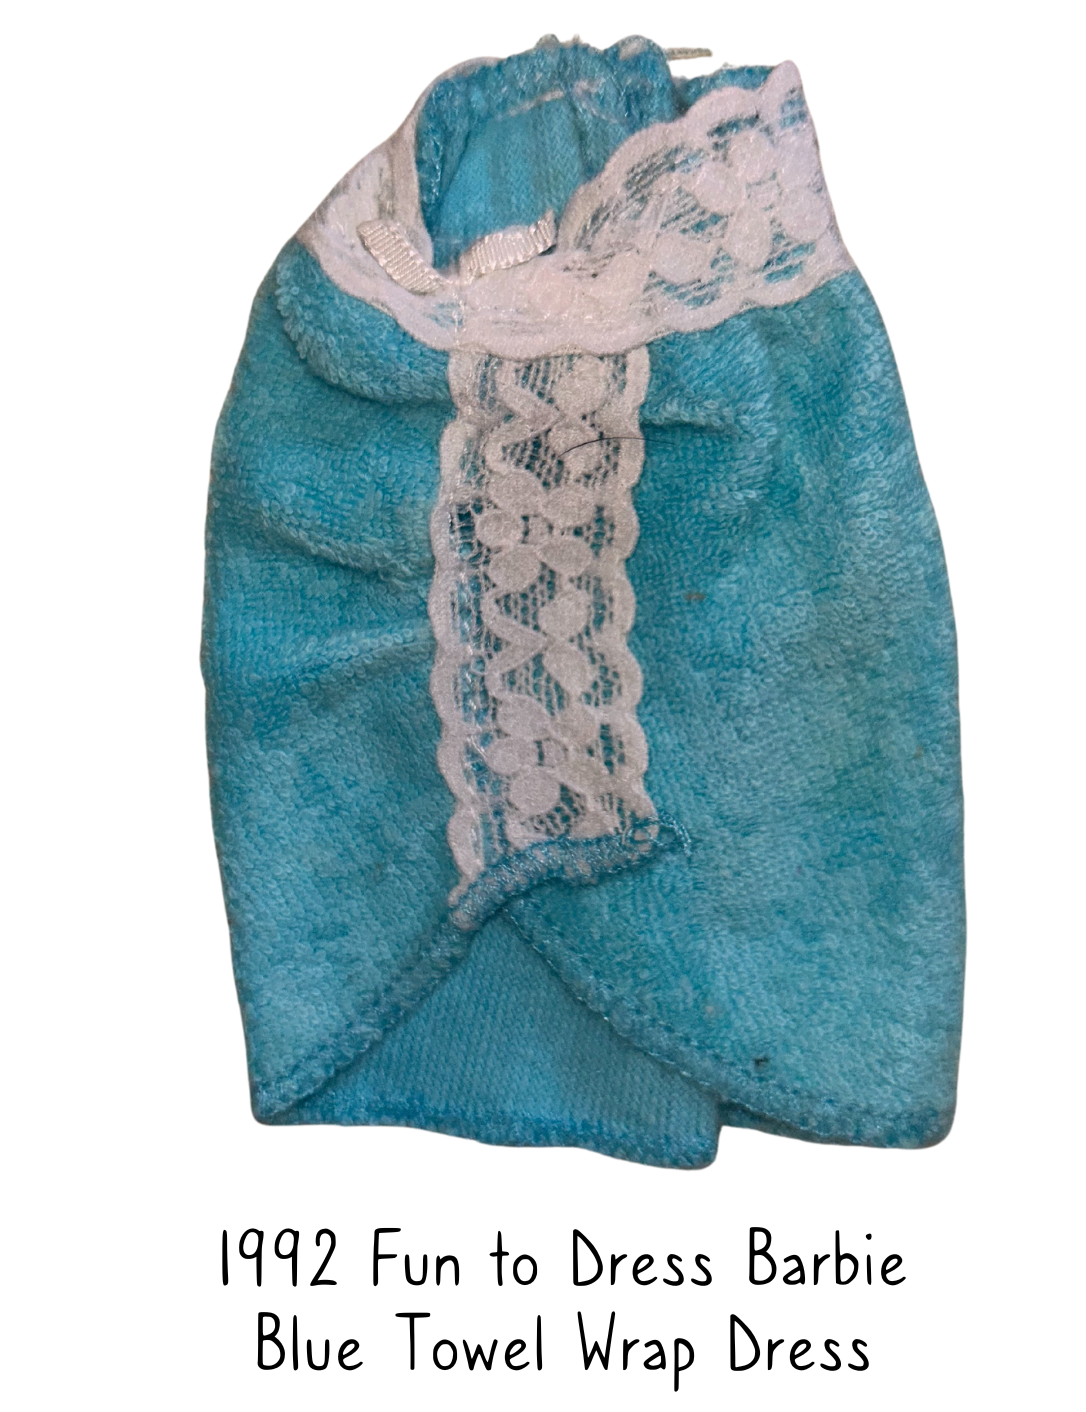 1992 Fun to Dress Barbie Blue Towel Wrap Dress